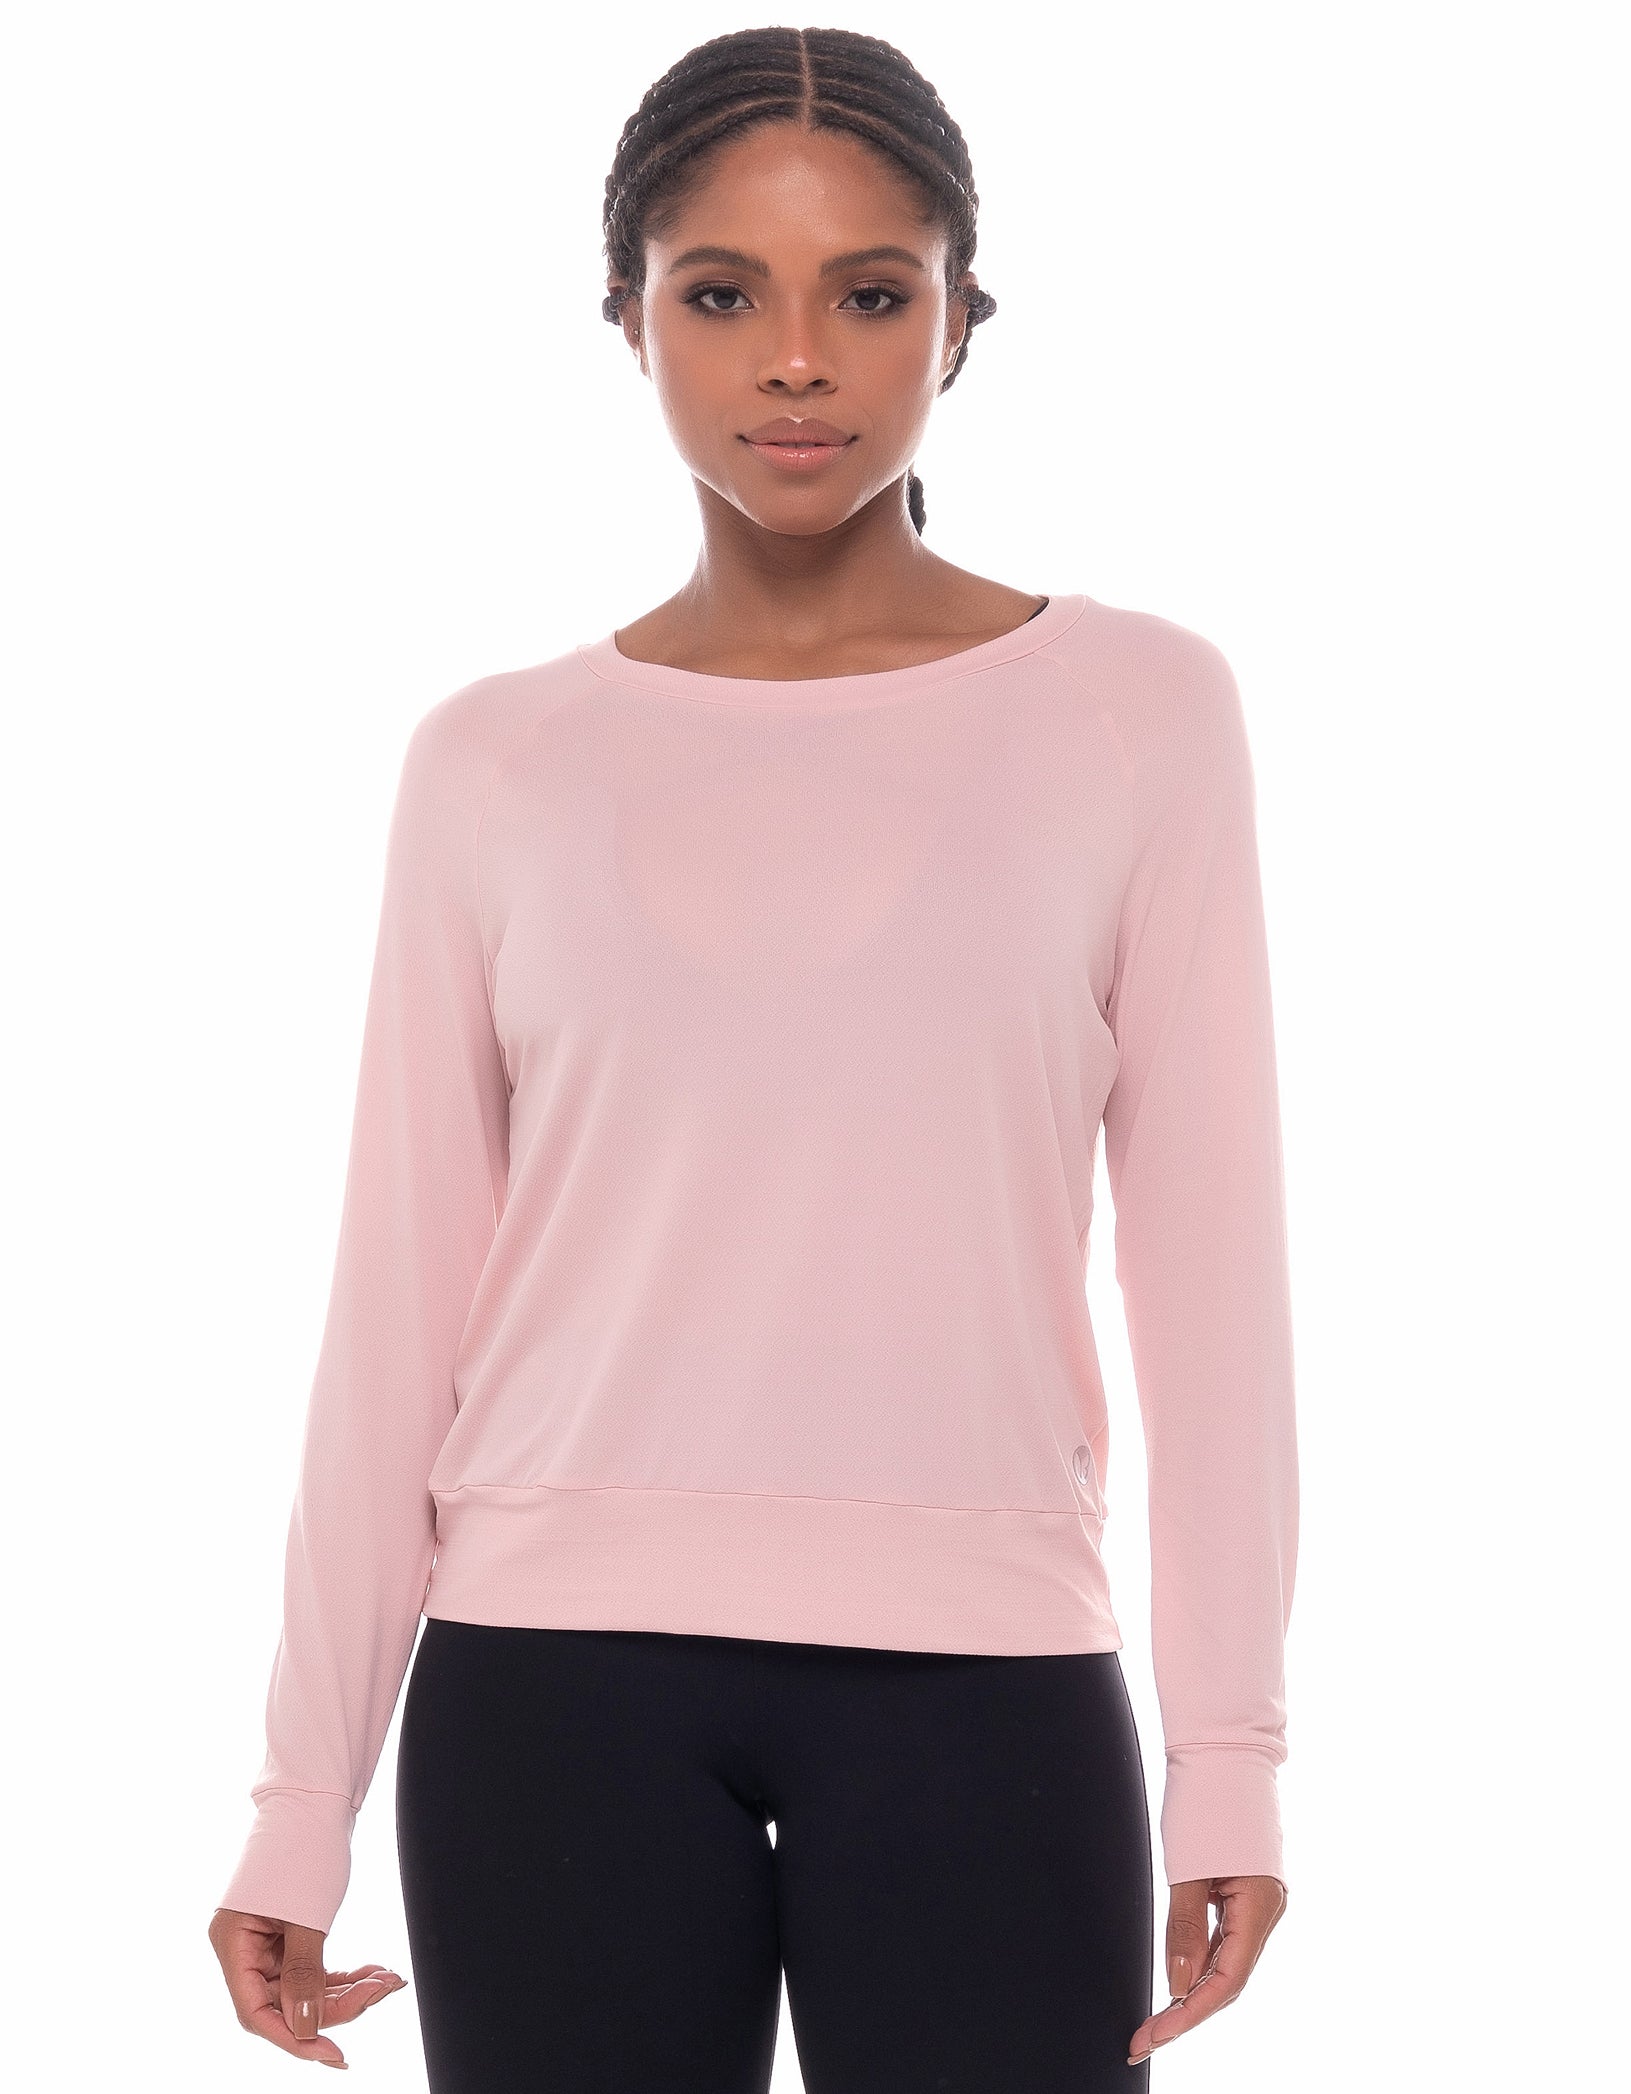 Vestem - Shirt Dry Fit Long Sleeve Soul pink Romance - BML155.C0243